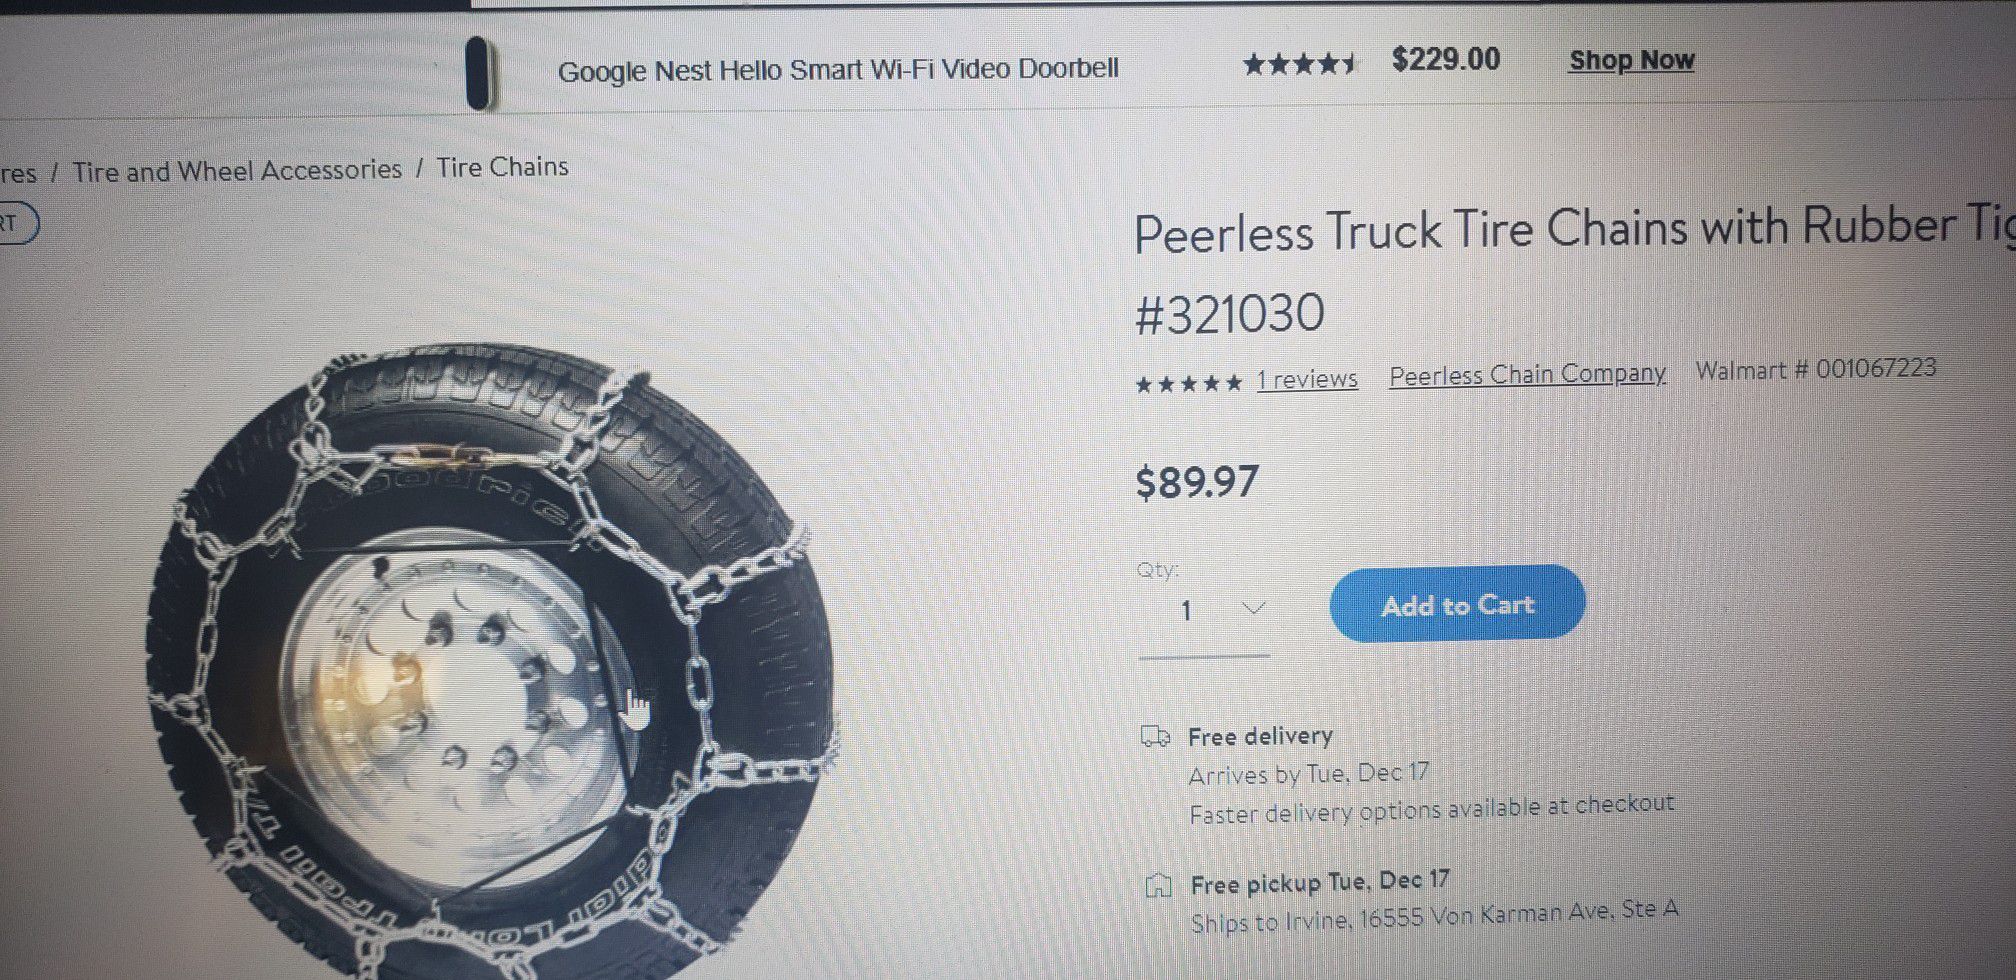 Peerless truck tire chains